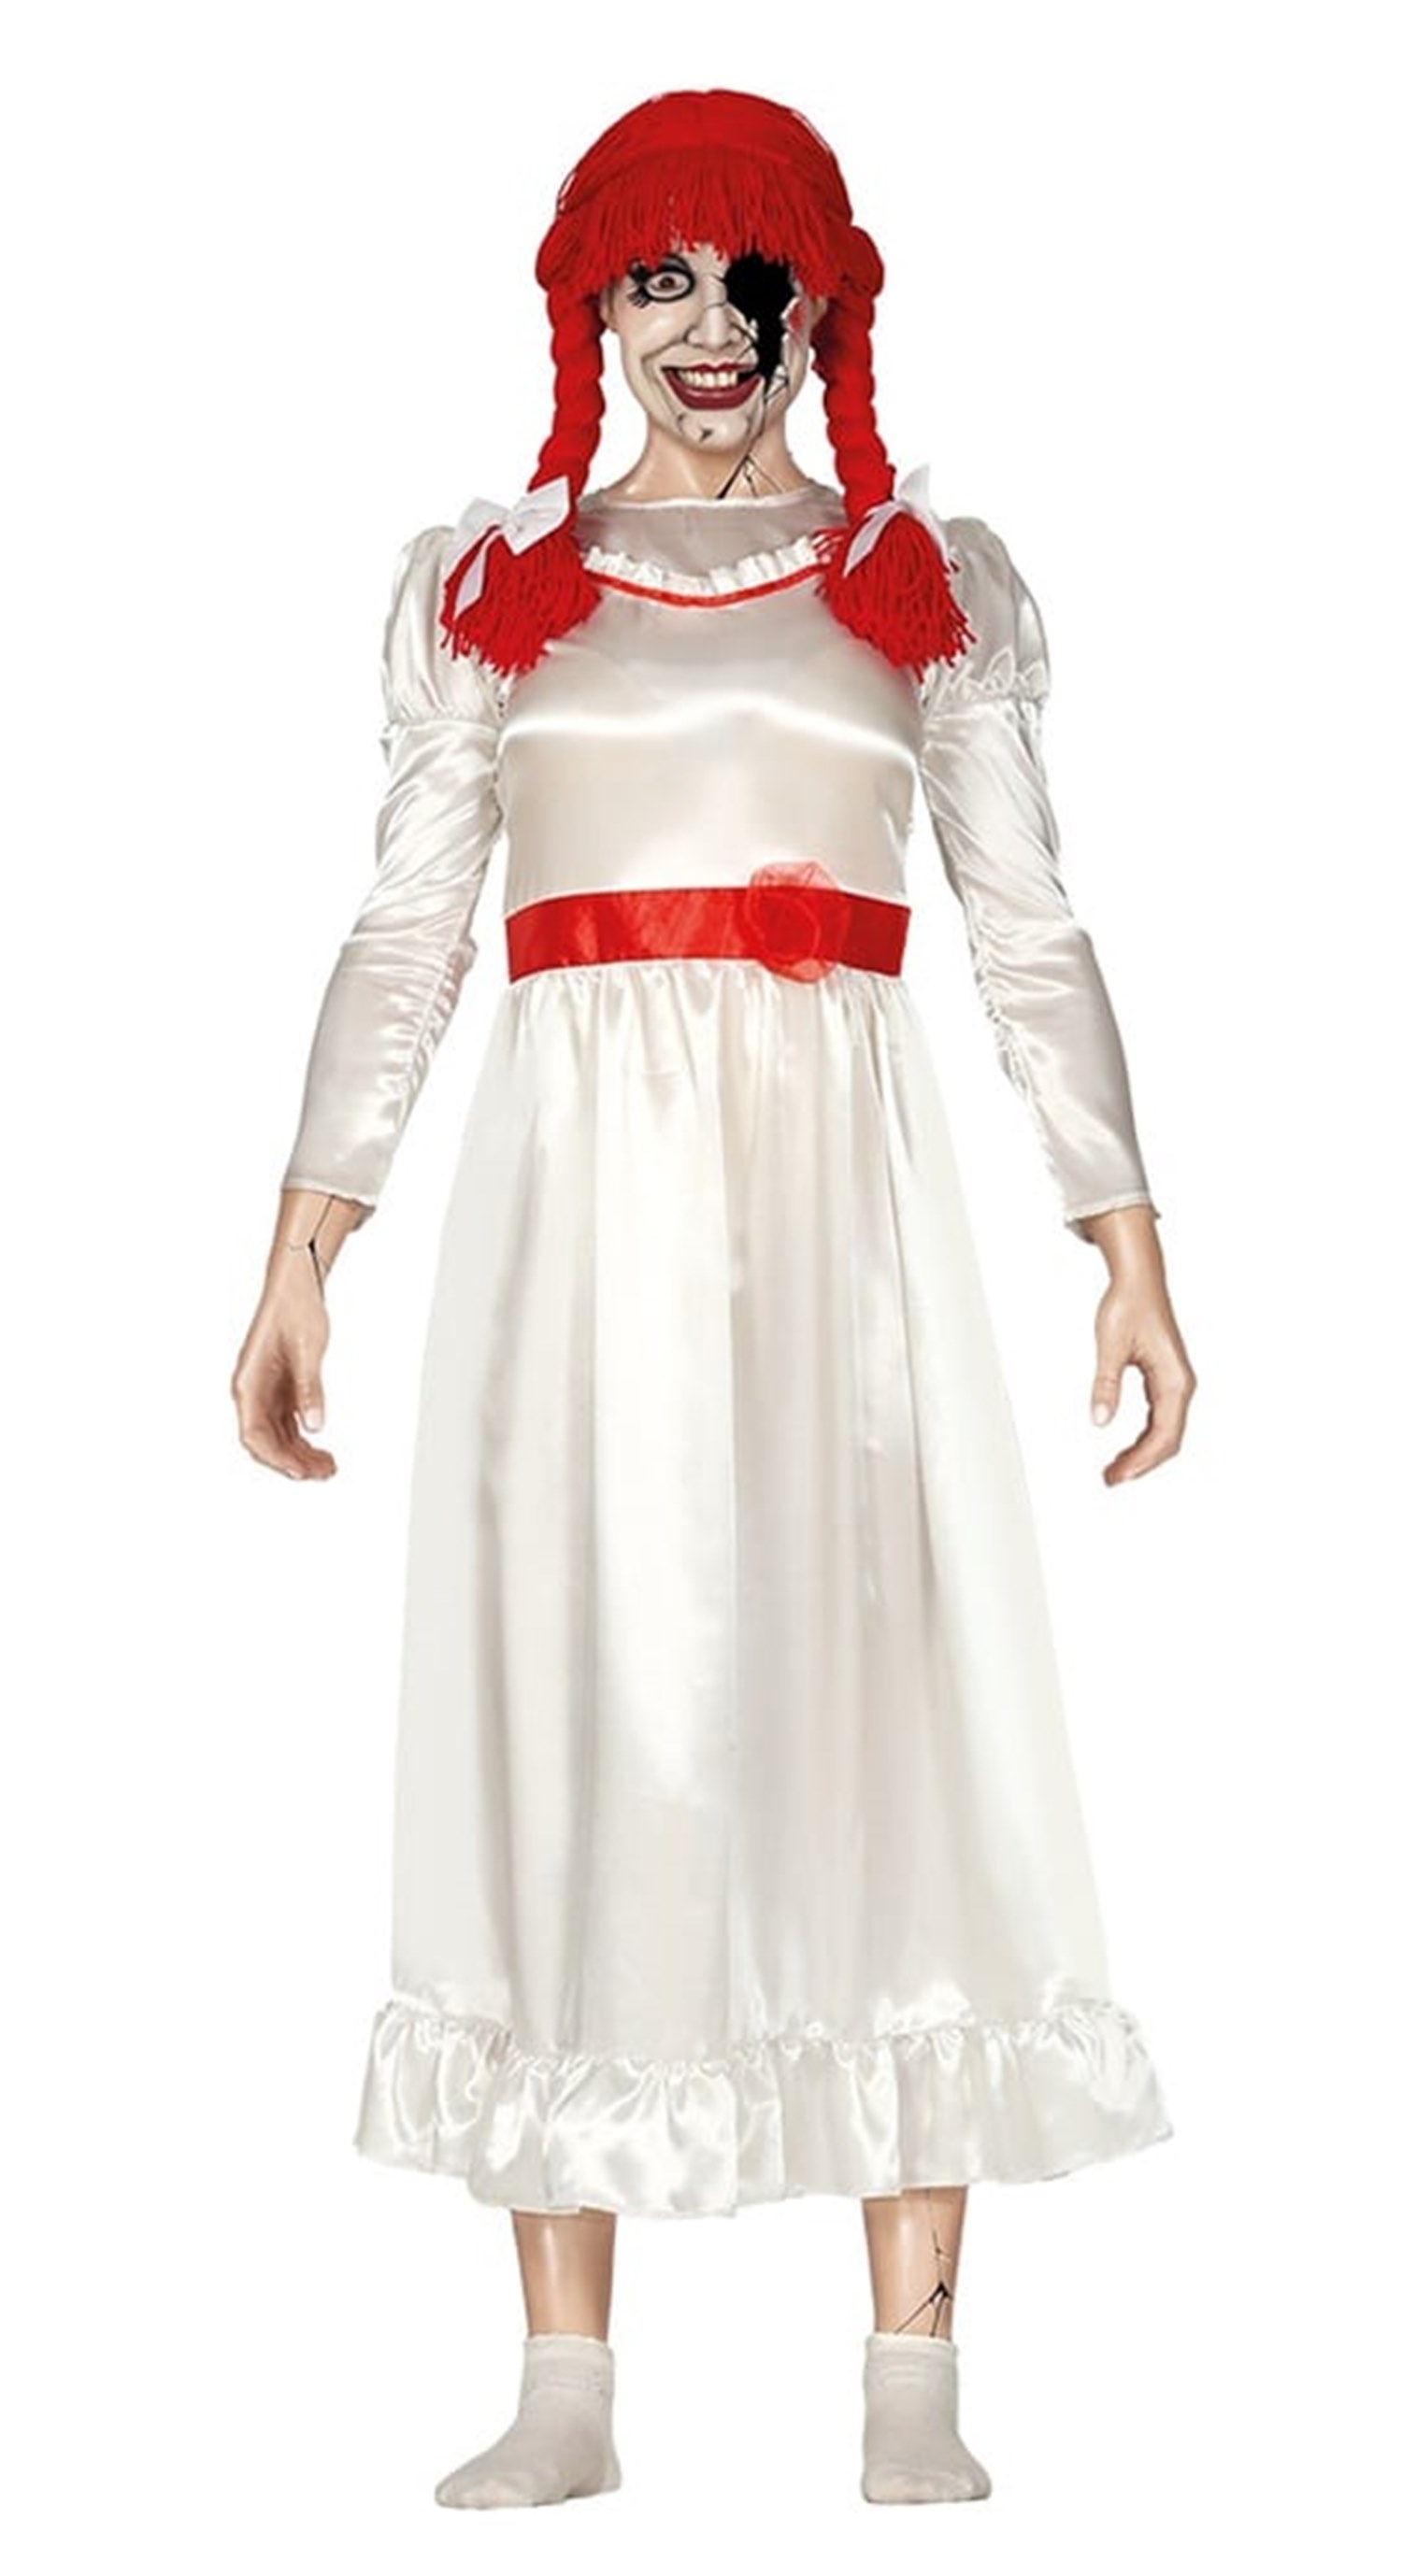 Gruselbraut disfraz de Halloween señora vestido de novia Halloween horrorkostüm señora vestido 